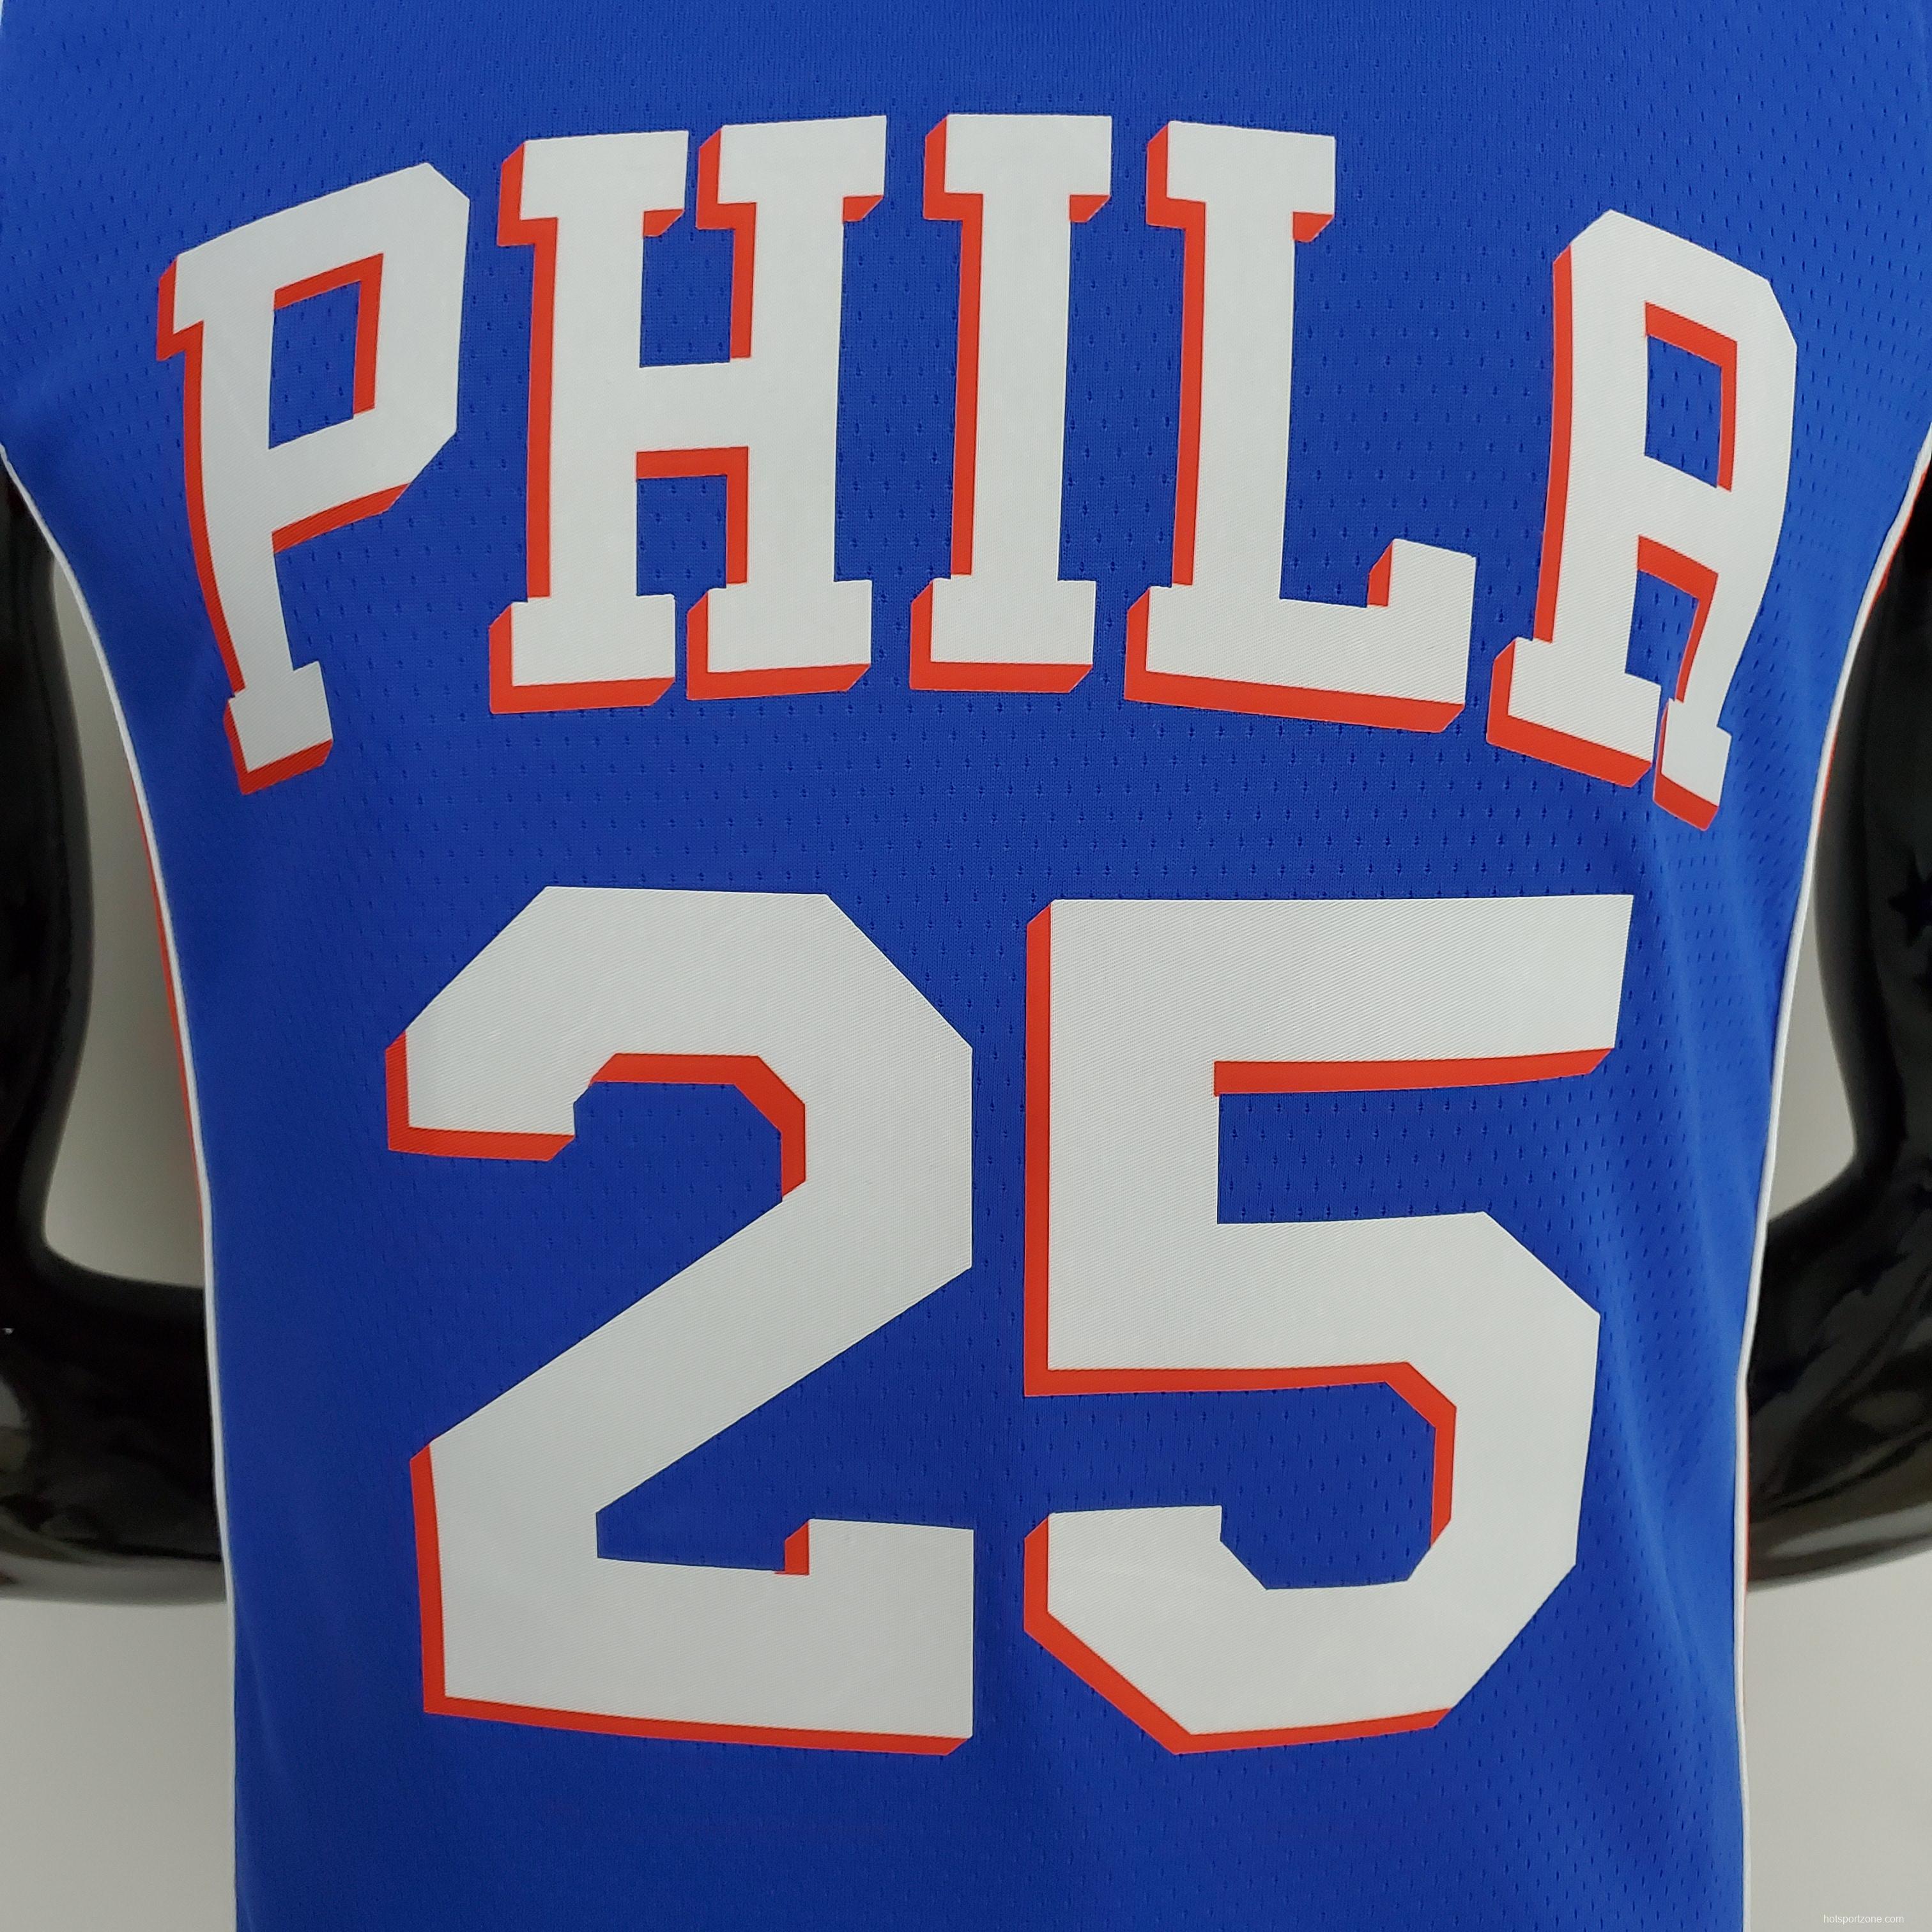 75th Anniversary Philadelphia 76ers SIMMONS#25 Blue NBA Jersey